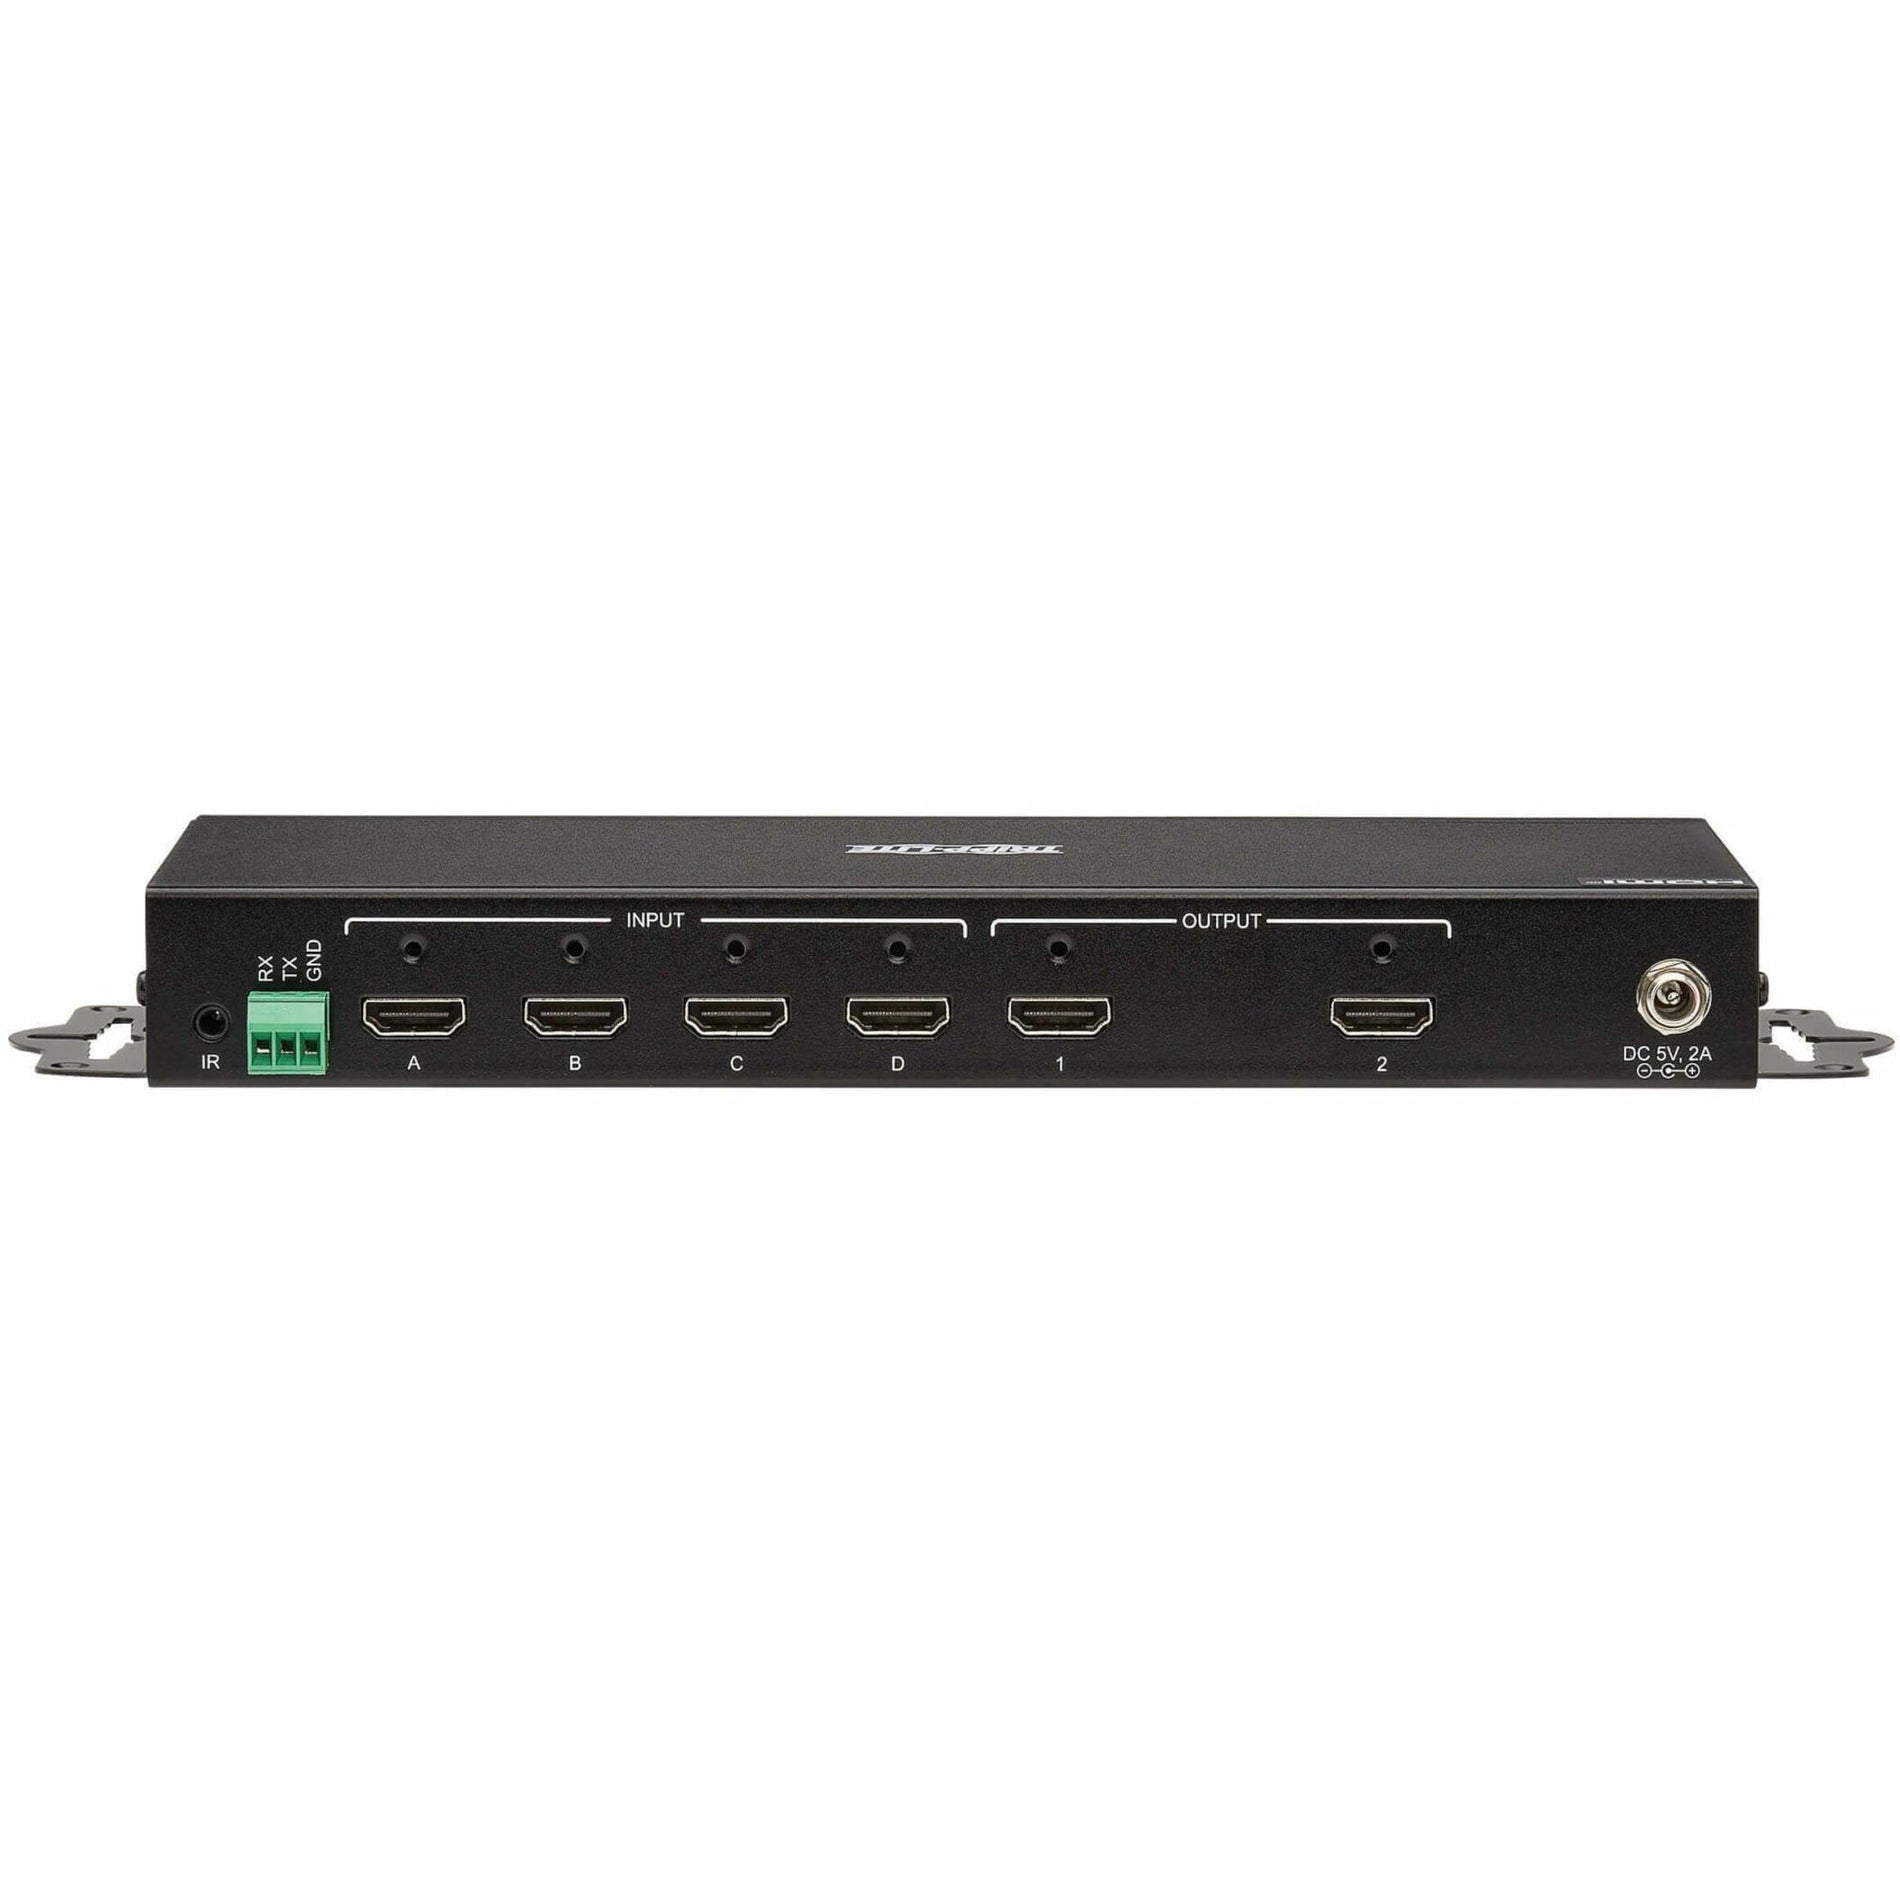 Tripp Lite B119-4X2-4K 4x2 HDMI Matrix Switch/Splitter, 4K Video Switchbox